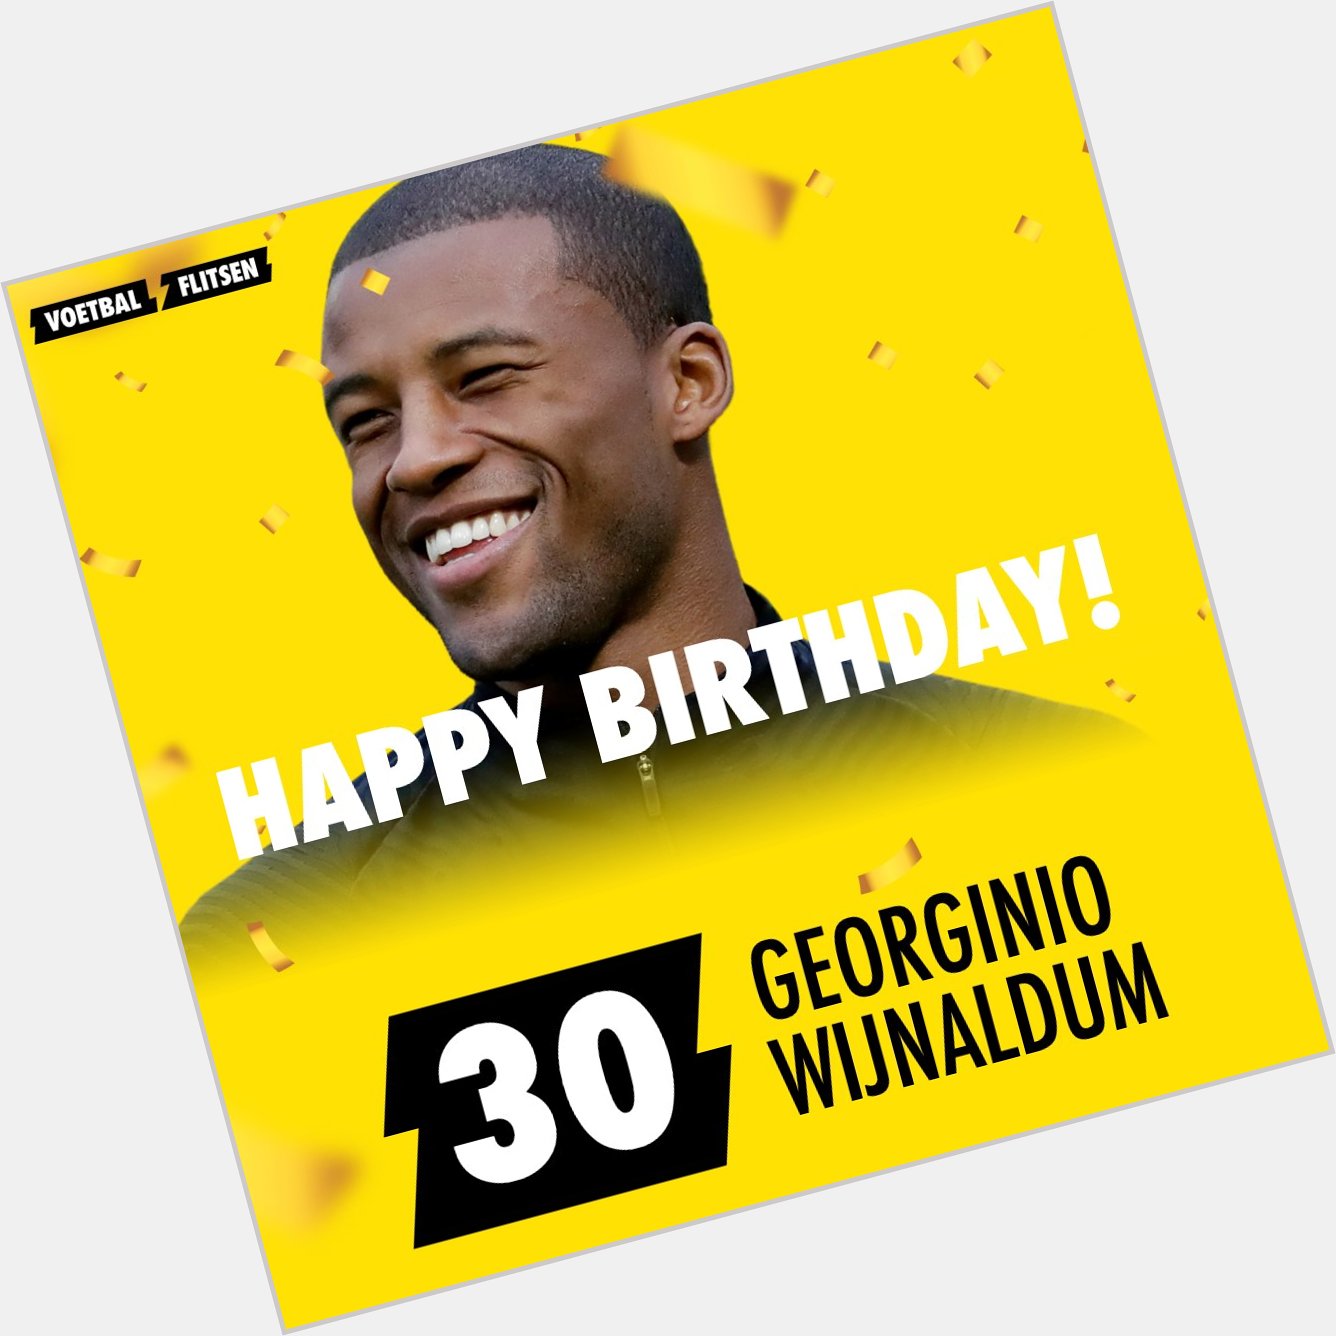 Happy birthday Georginio Wijnaldum. 